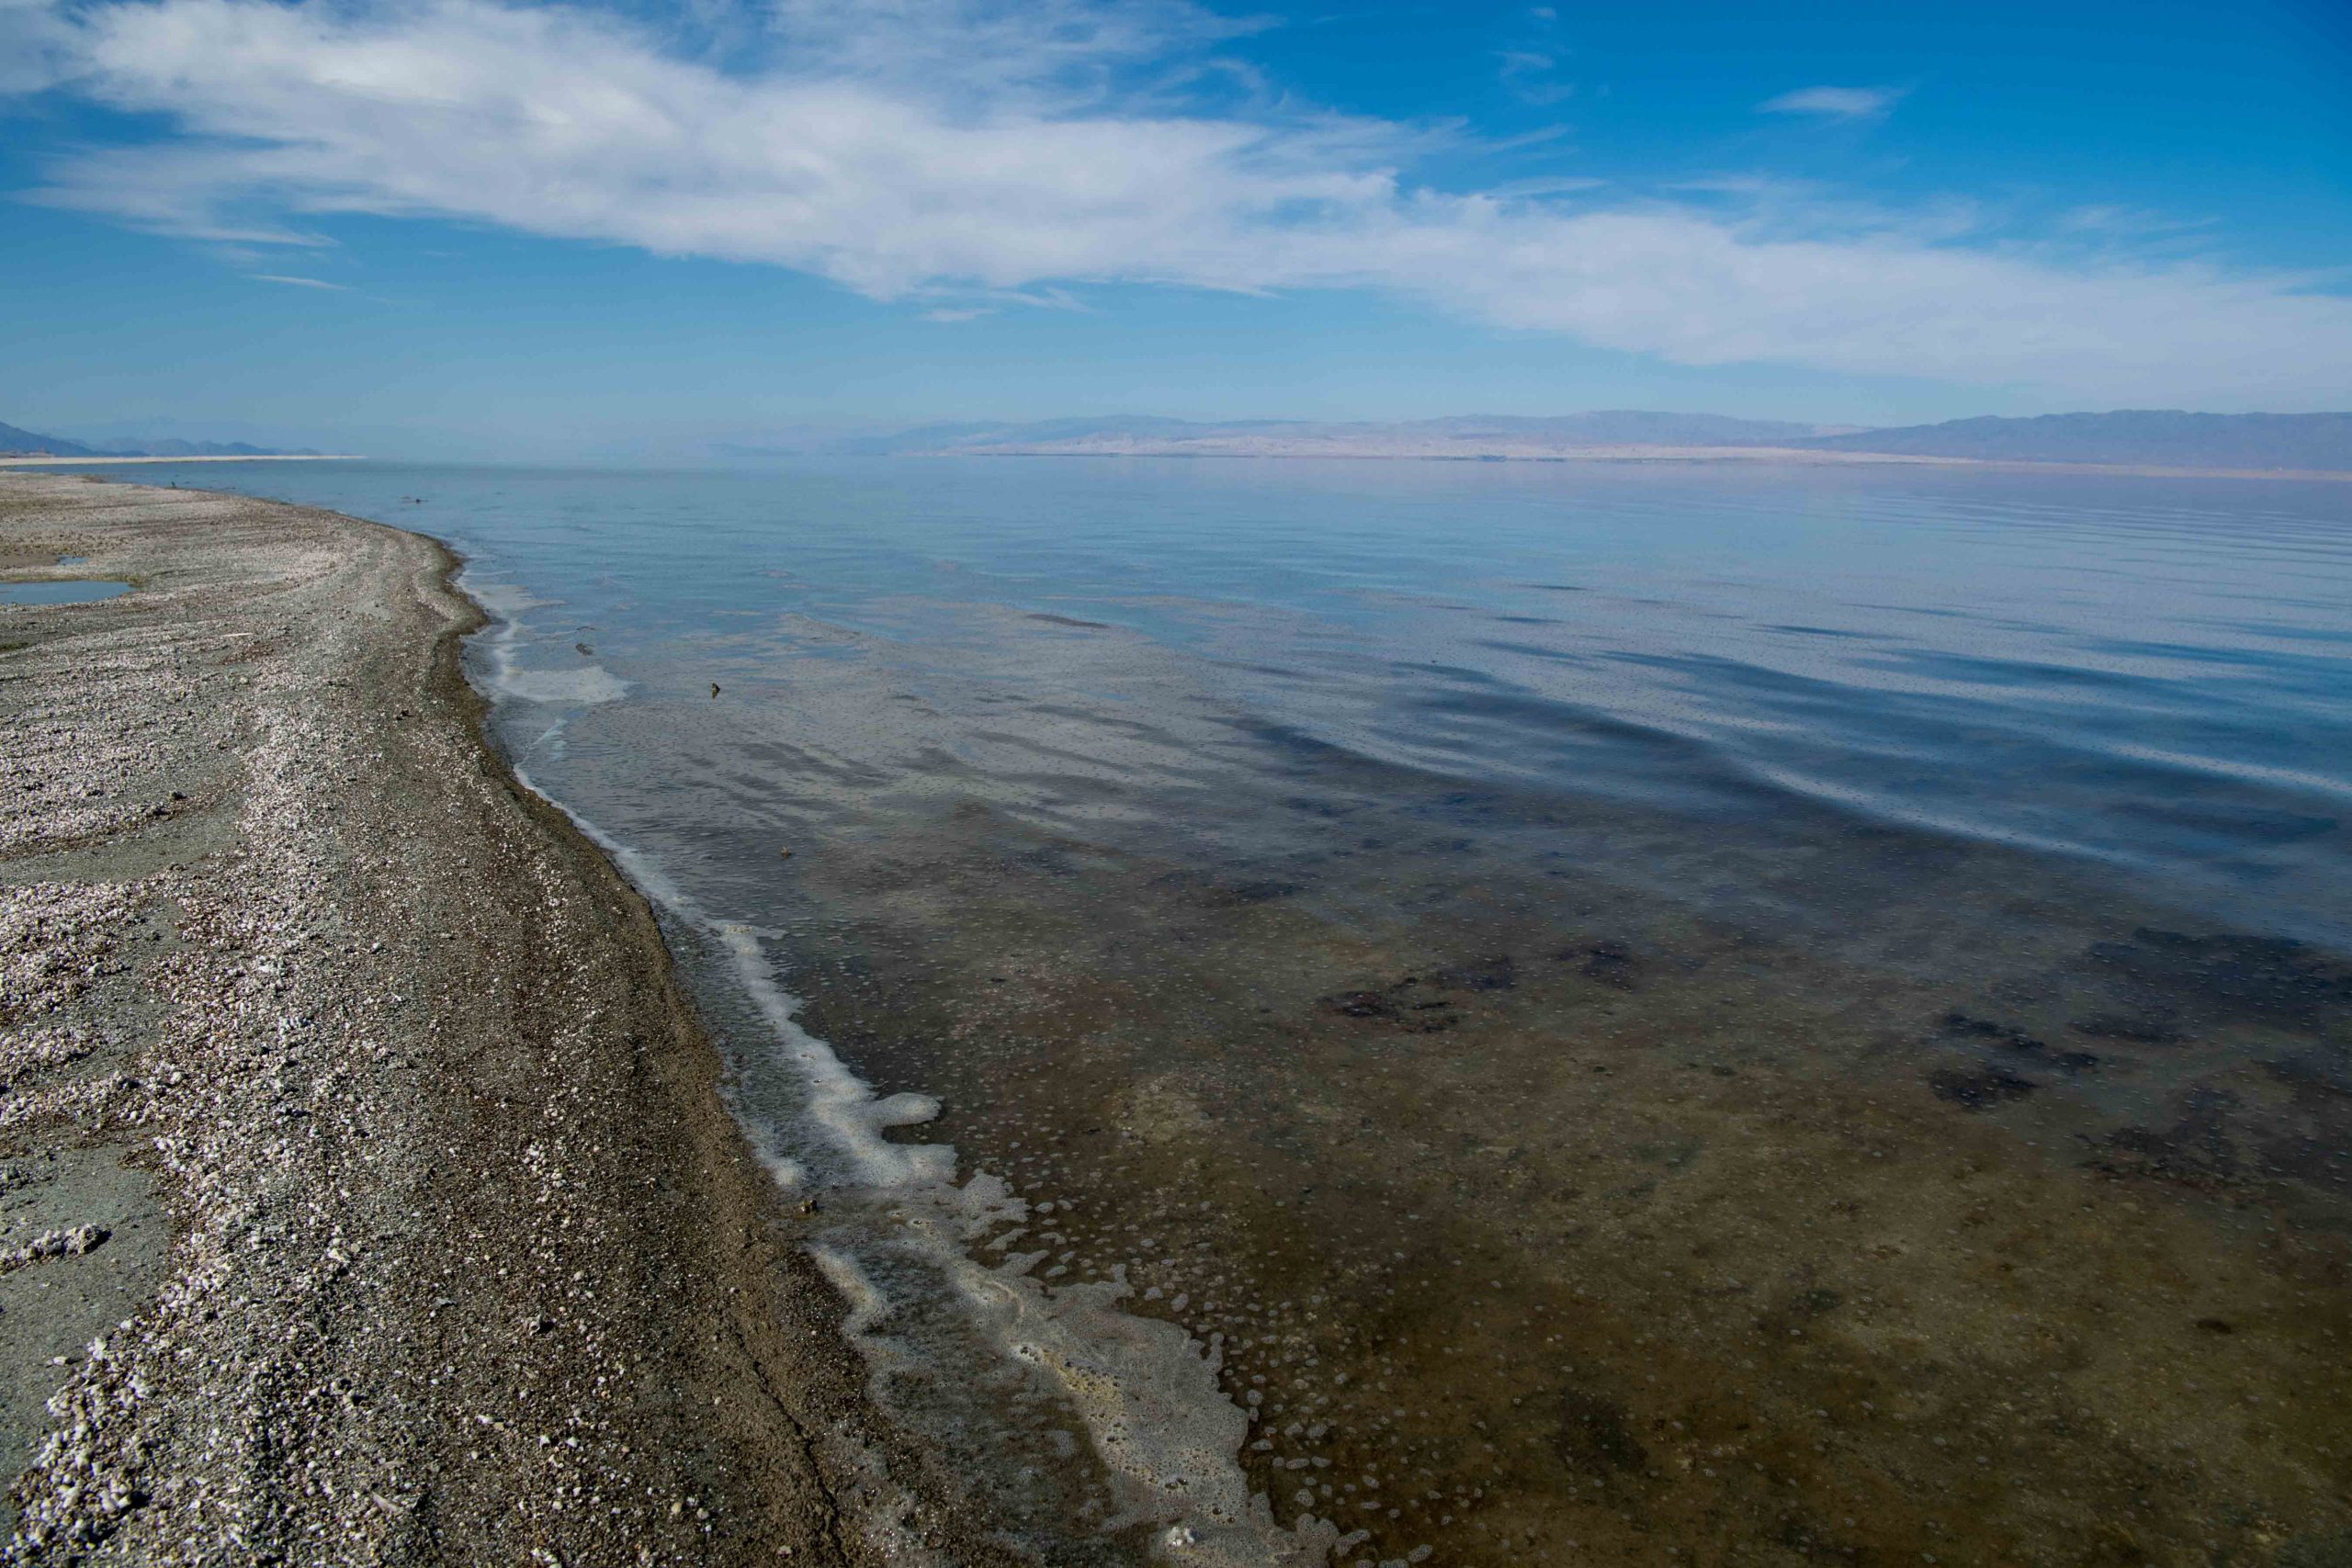 Biden-Harris administration allocates $72M for Salton Sea restoration to protect wildlife and communities.